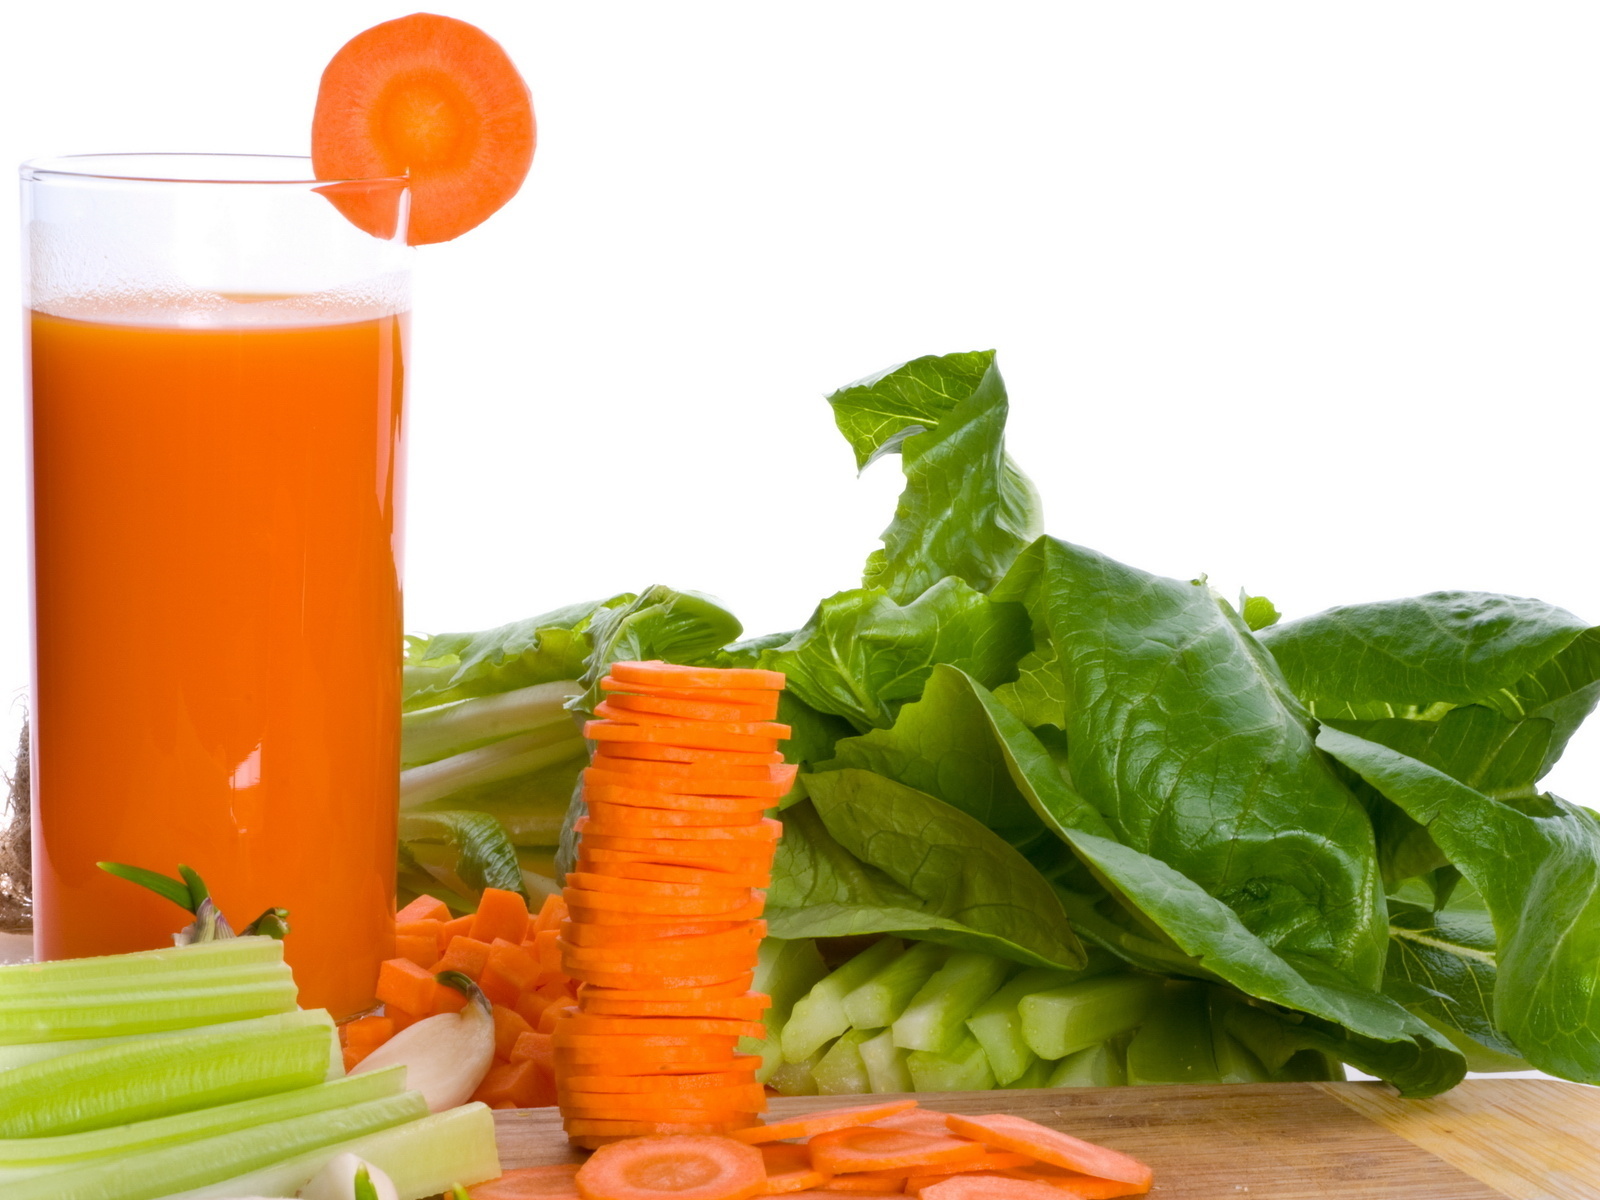 carrot-juice-is-harmful-to-health[1]